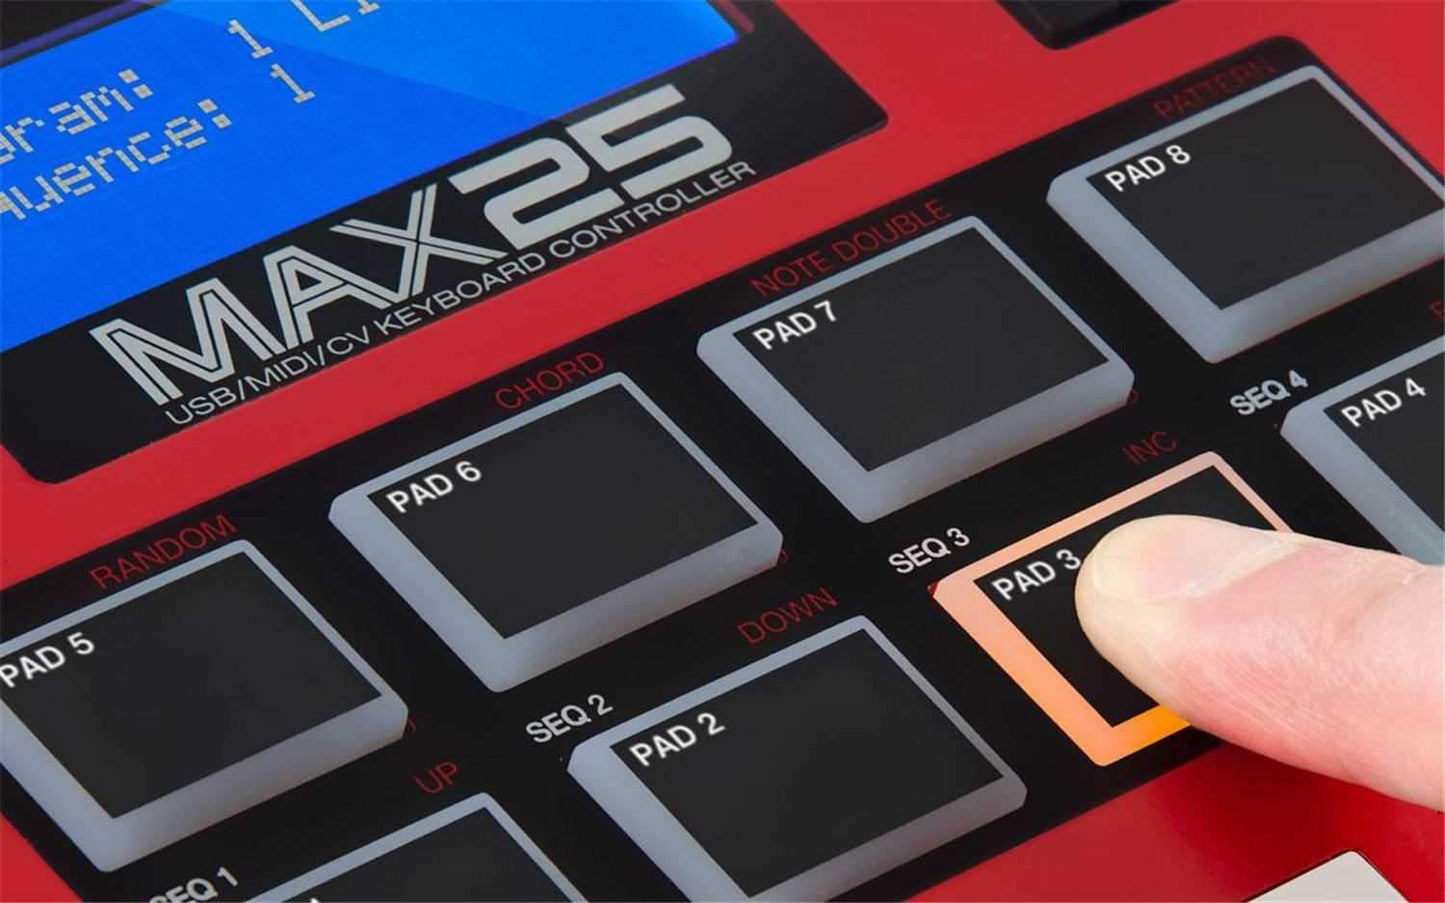 Akai MAX25 Premium USB/MIDI Controller - 25 Keys - PSSL ProSound and Stage Lighting